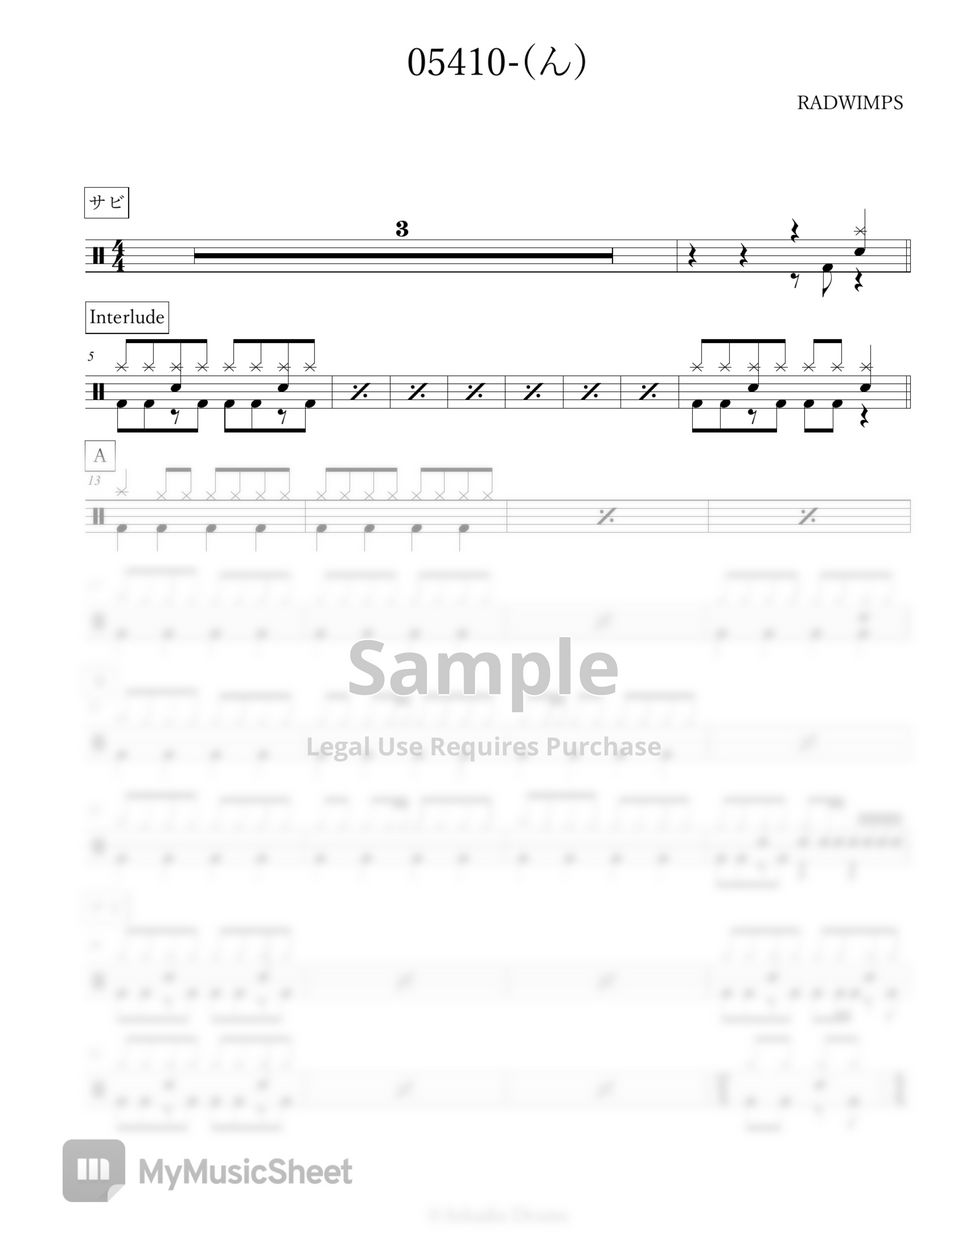 RADWIMPS - 05410-(ん)（Okoshite） Sheets by Arkadia Drums